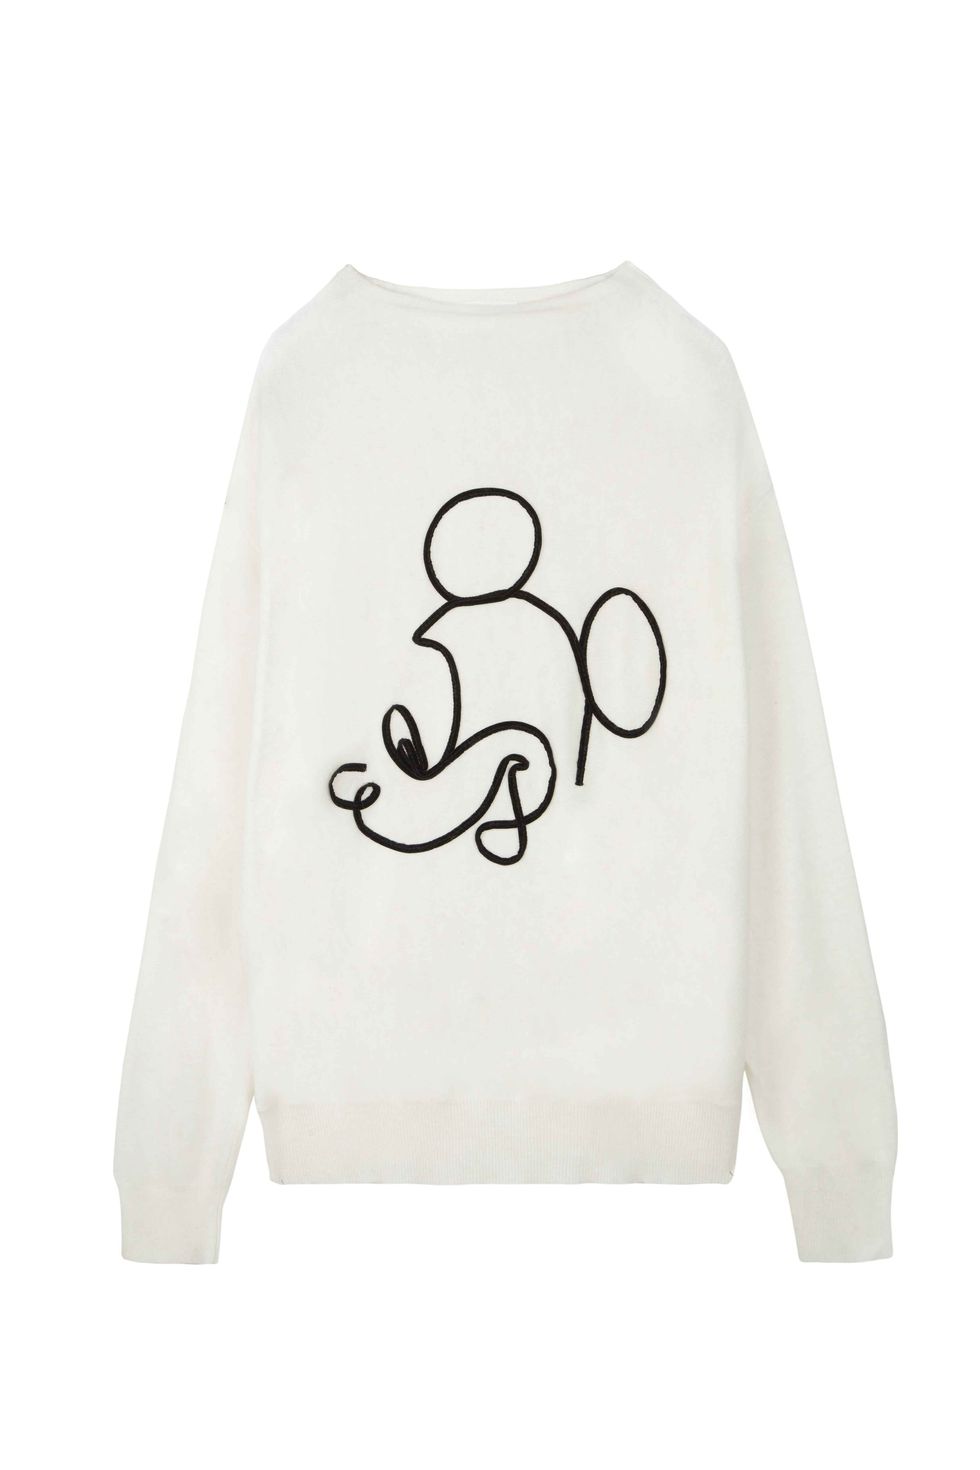 Product, Sleeve, White, Baby & toddler clothing, Grey, Active shirt, Sweatshirt, Symbol, Long-sleeved t-shirt, Humour, 